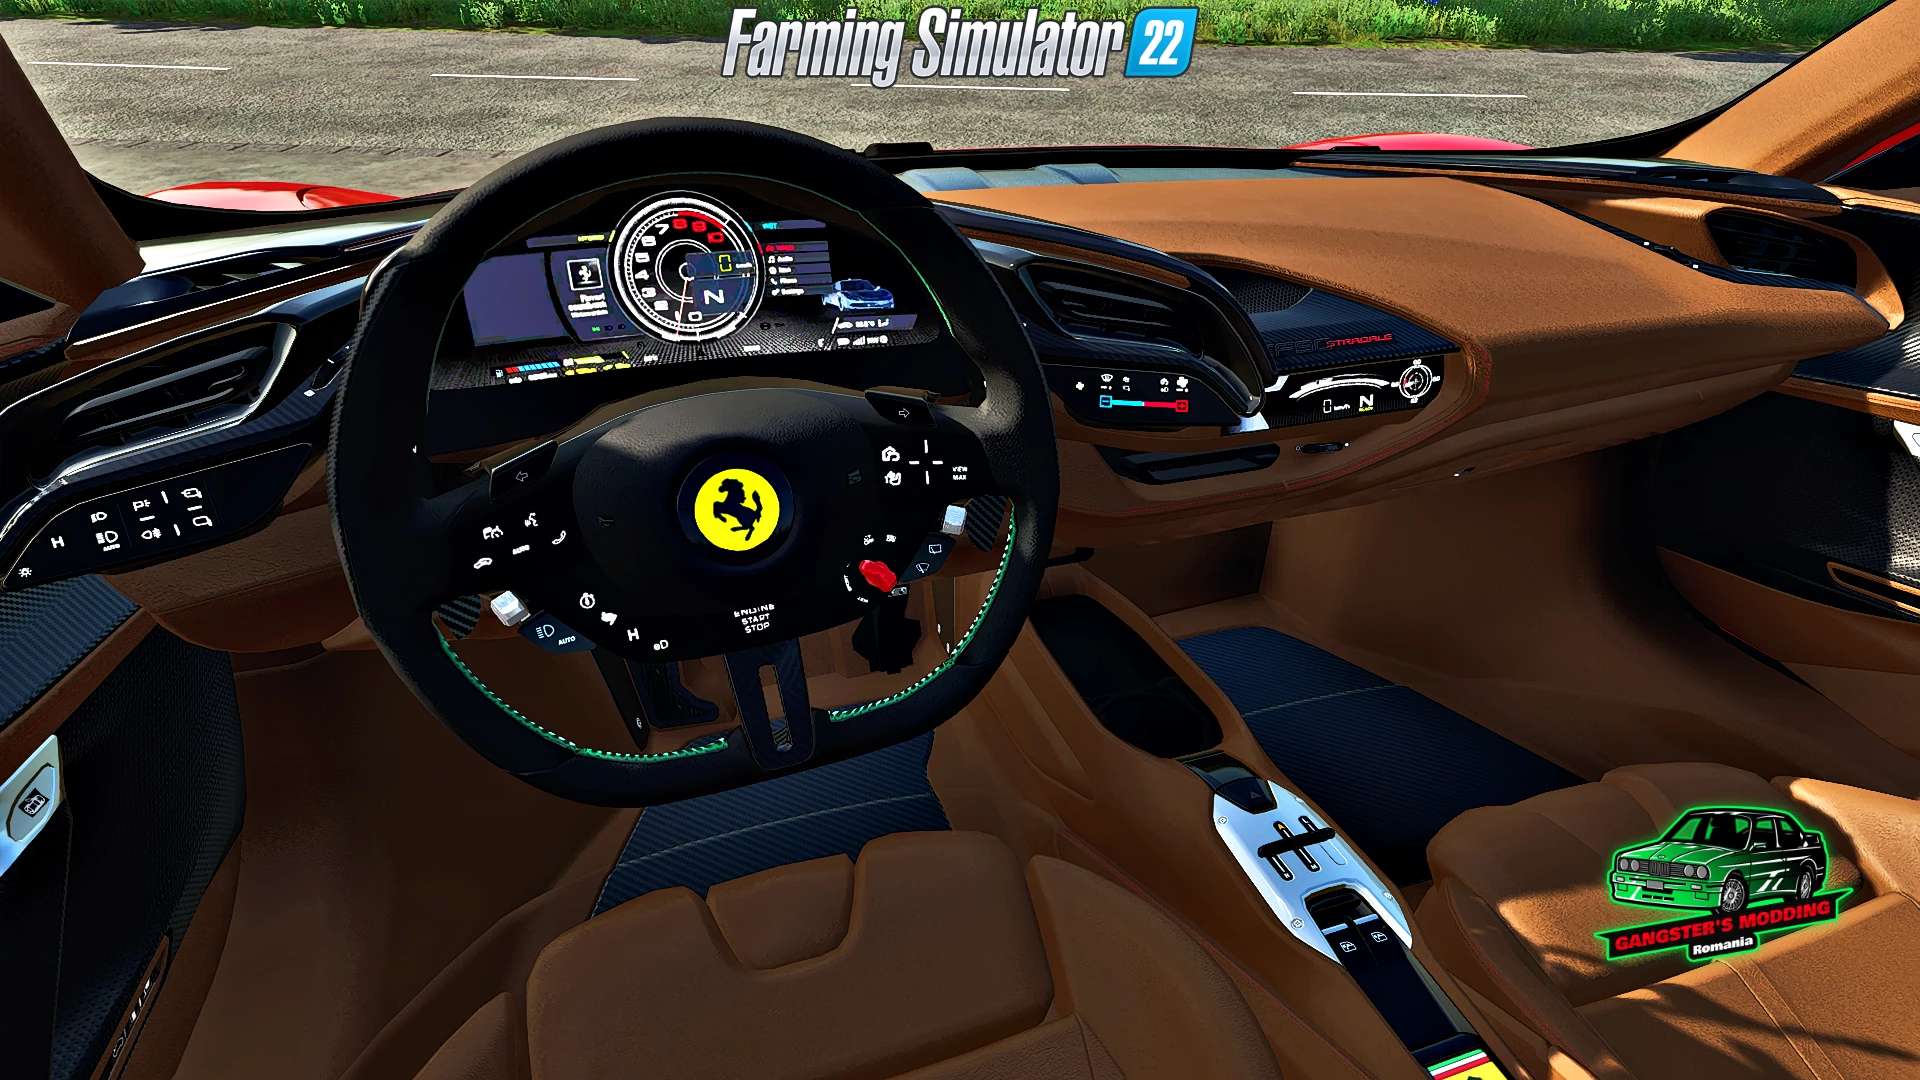 Ferrari SF90 Stradale V1.0.0.0 - Farming Simulator 22 Mod